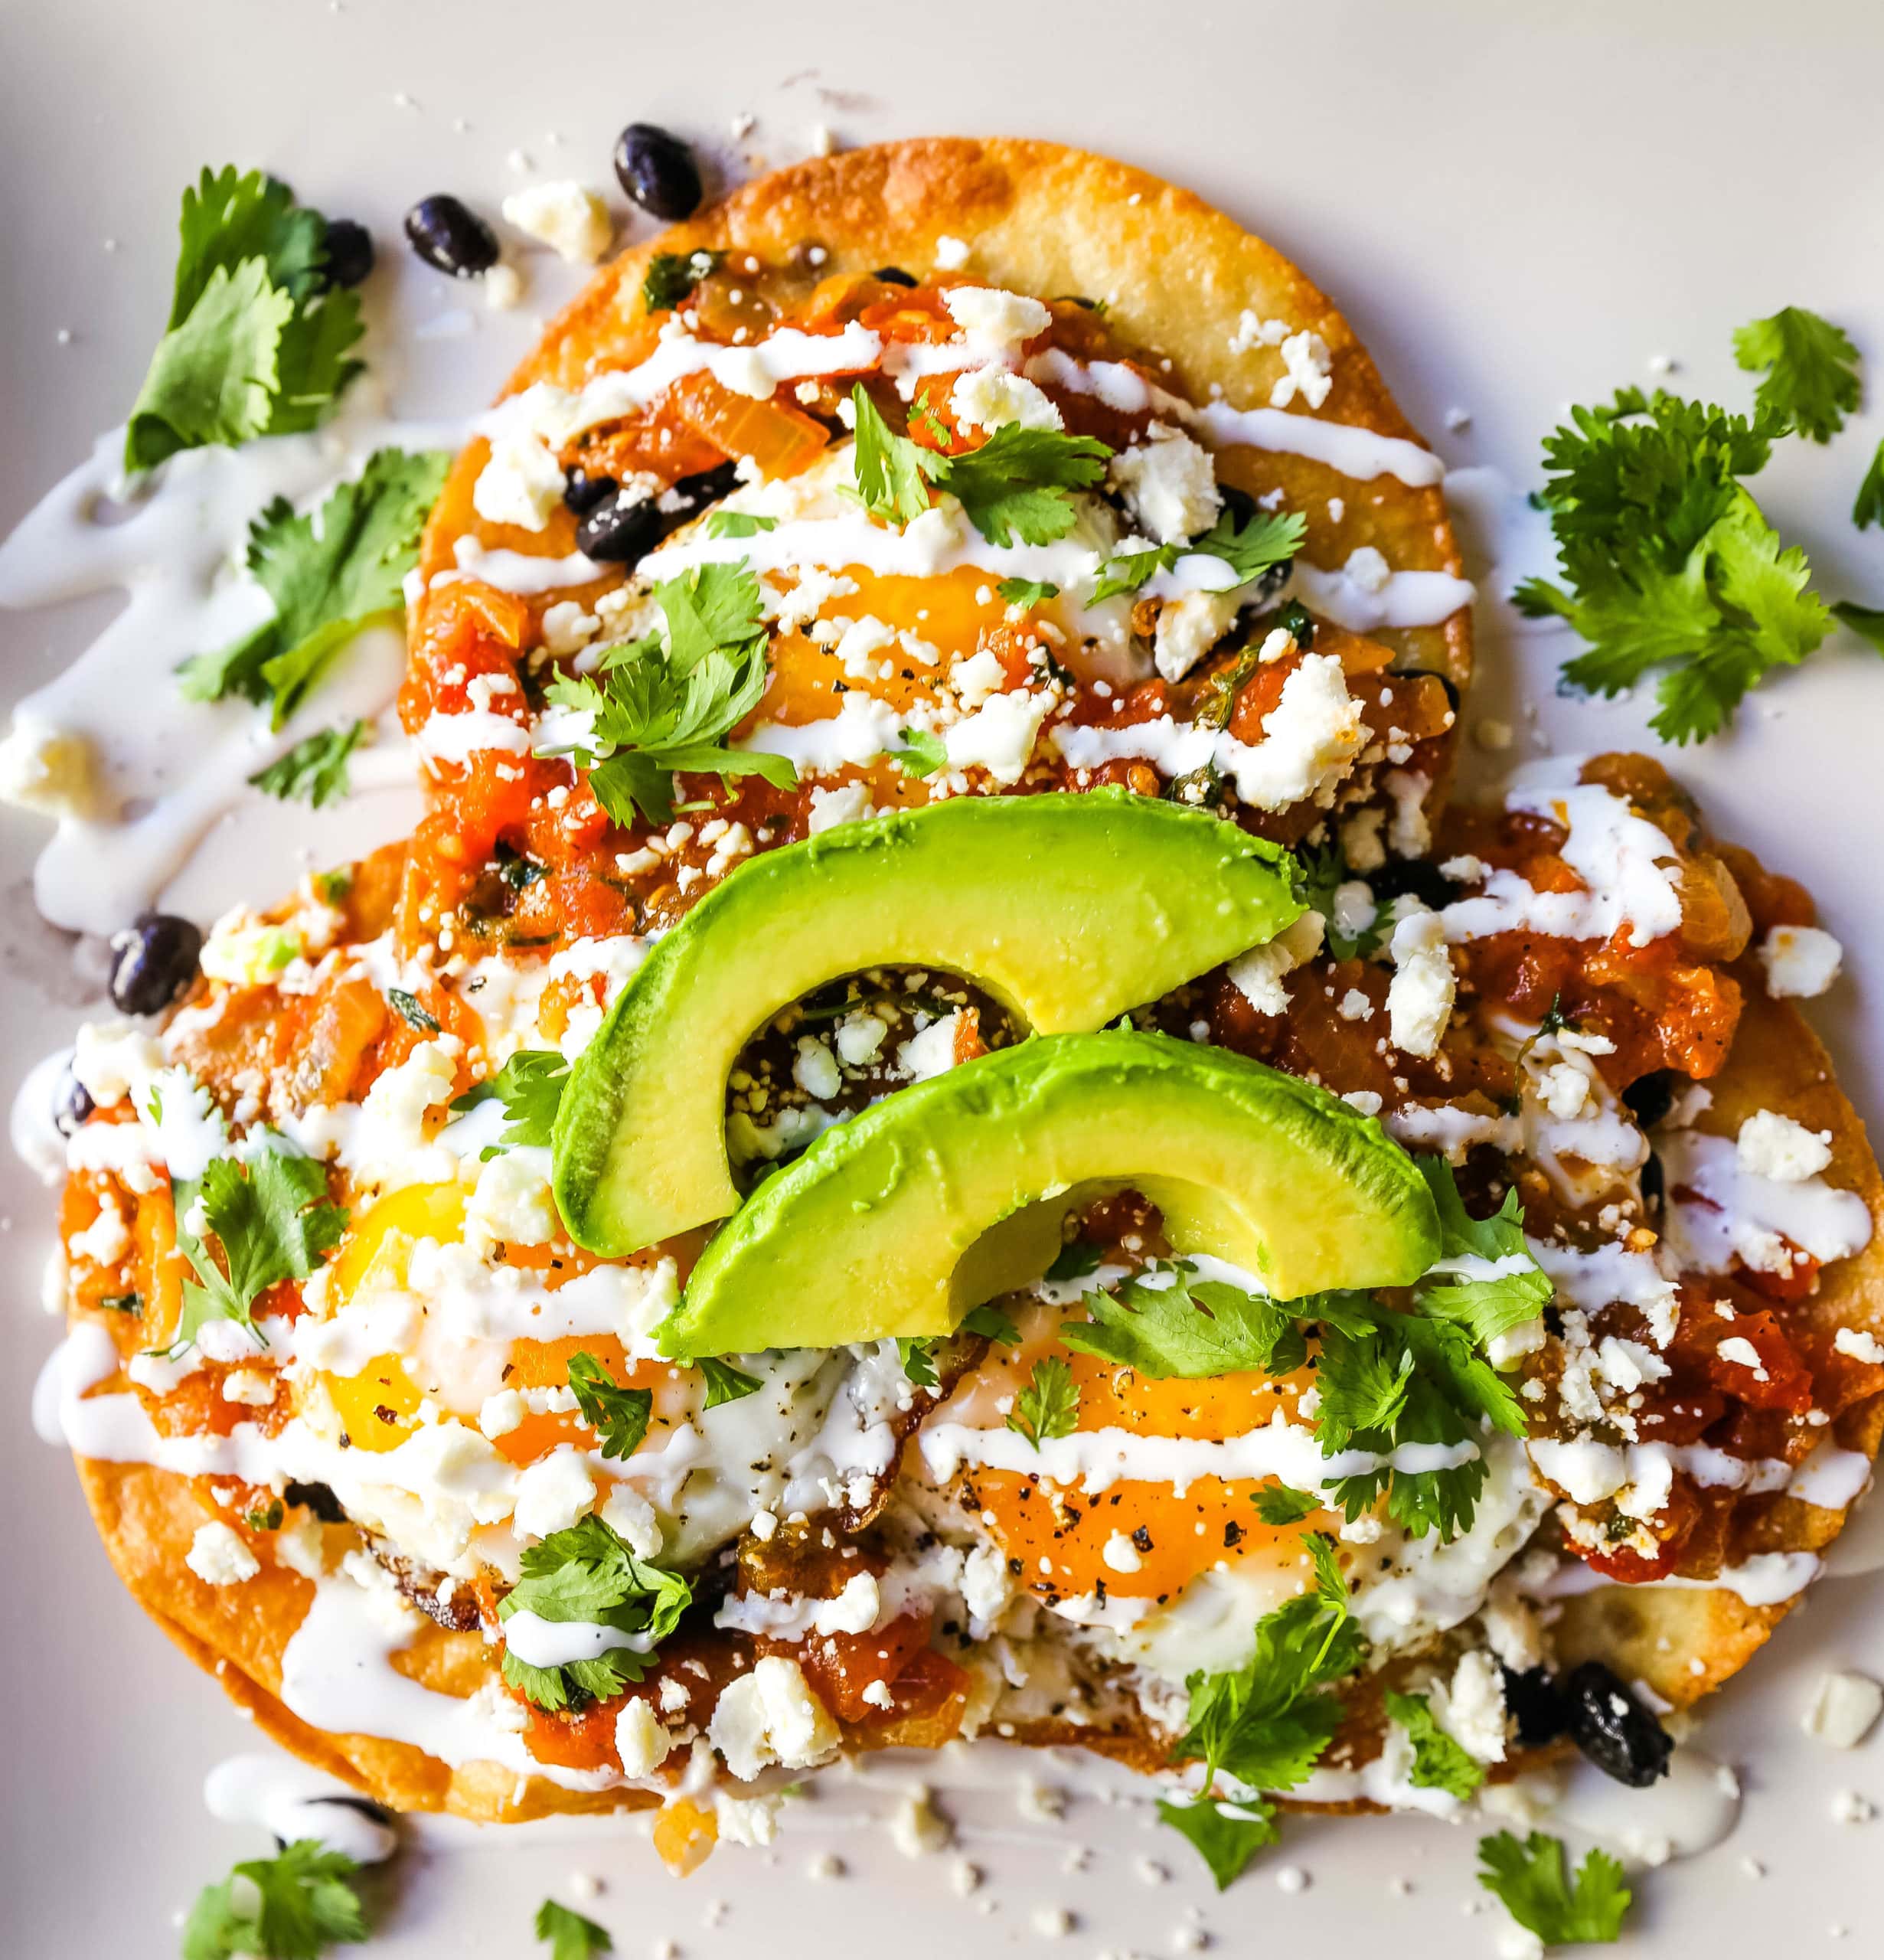 Huevos Rancheros. A traditional Mexican breakfast dish made with fried corn tortillas, fried egg, ranchera salsa, beans, avocado, cheese, and salsa.  #huevosrancheros #mexican #mexicanfood #breakfast